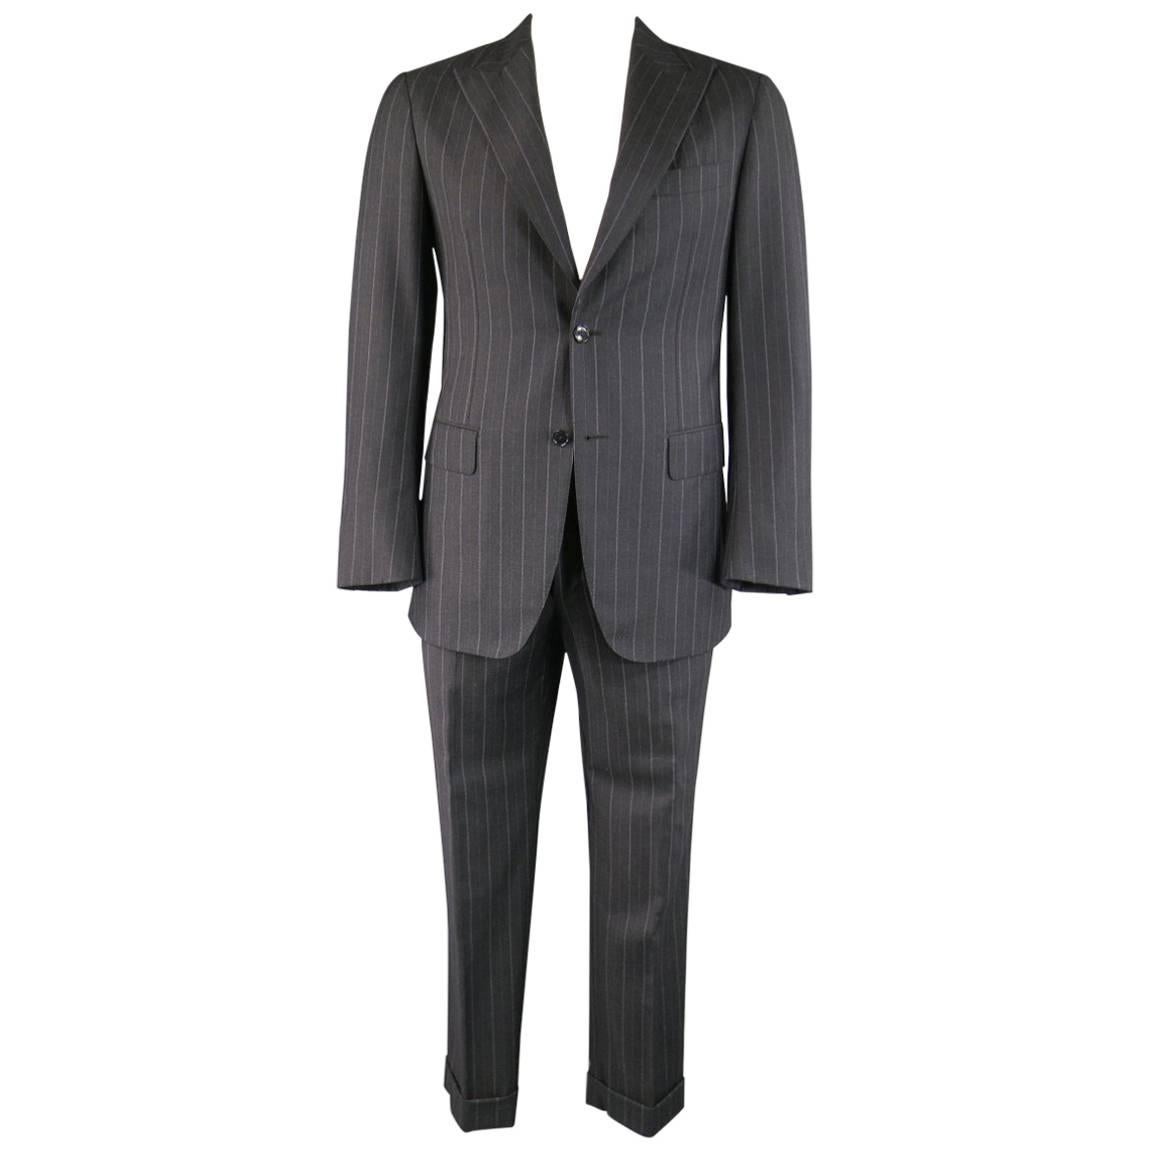 Pal Zileri Charcoal and Lavender Striped Wool/Cashmere Peak Lapel Suit, 40 Reg